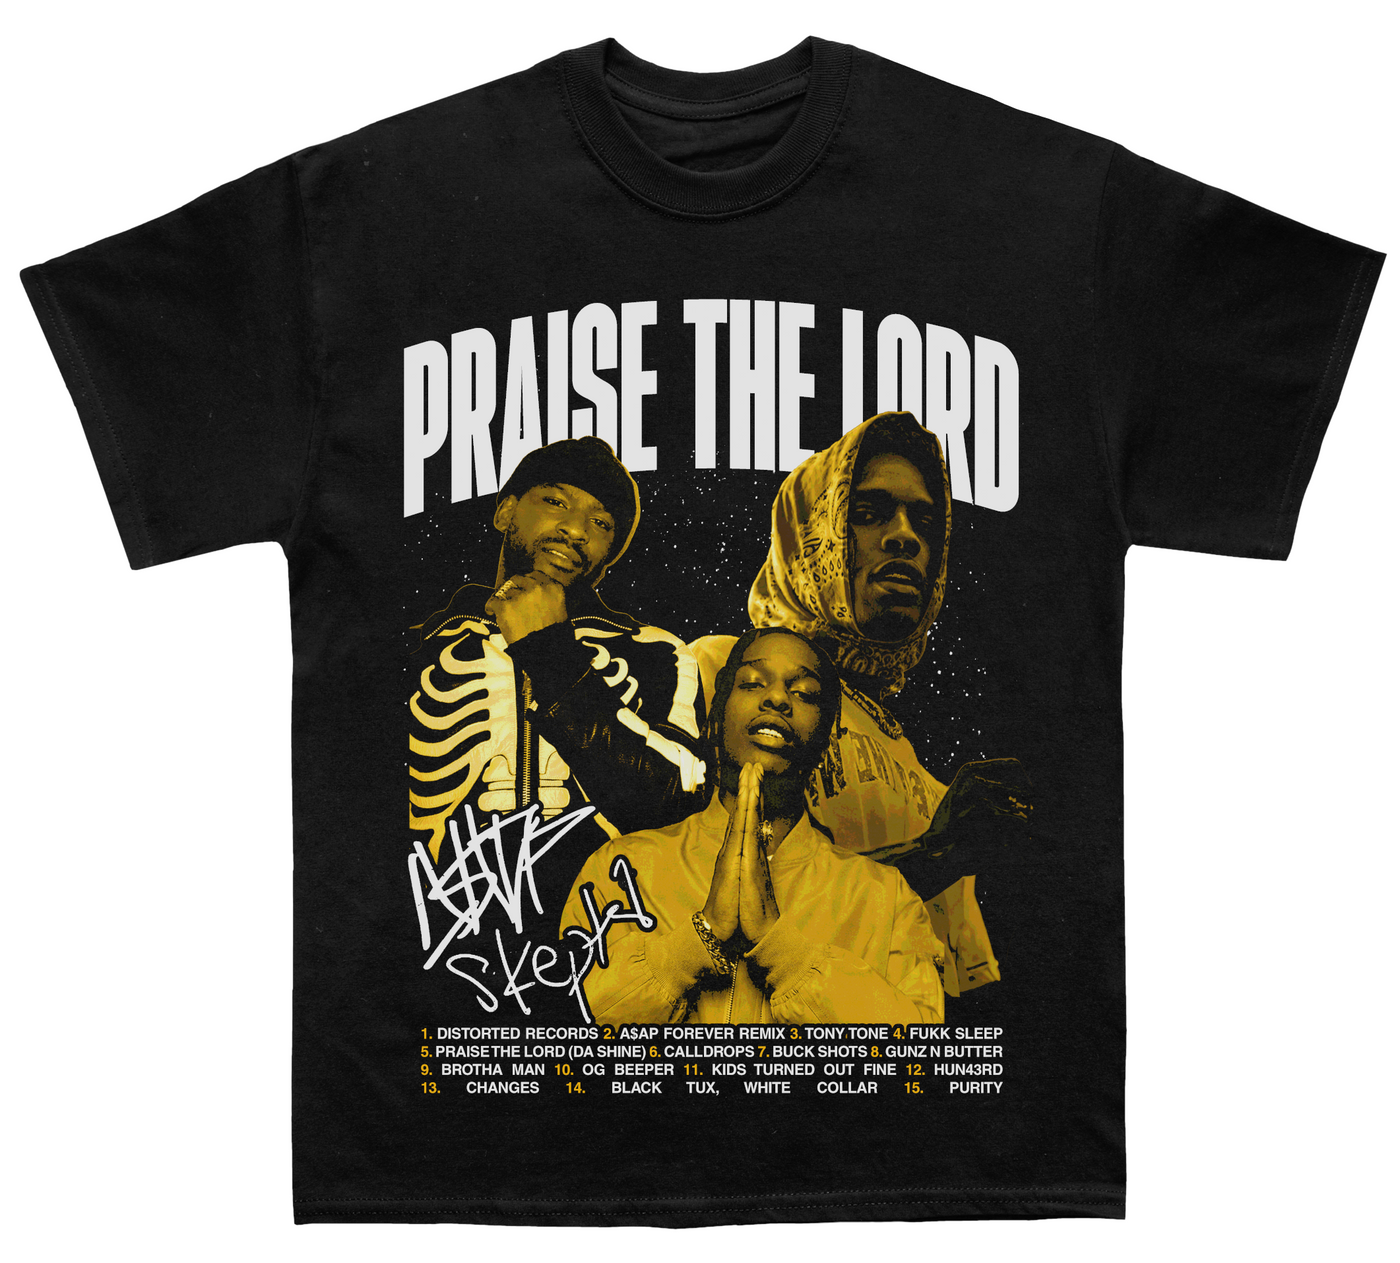 Asap Rocky & Skepta " Praise The Lord" Album T-shirt